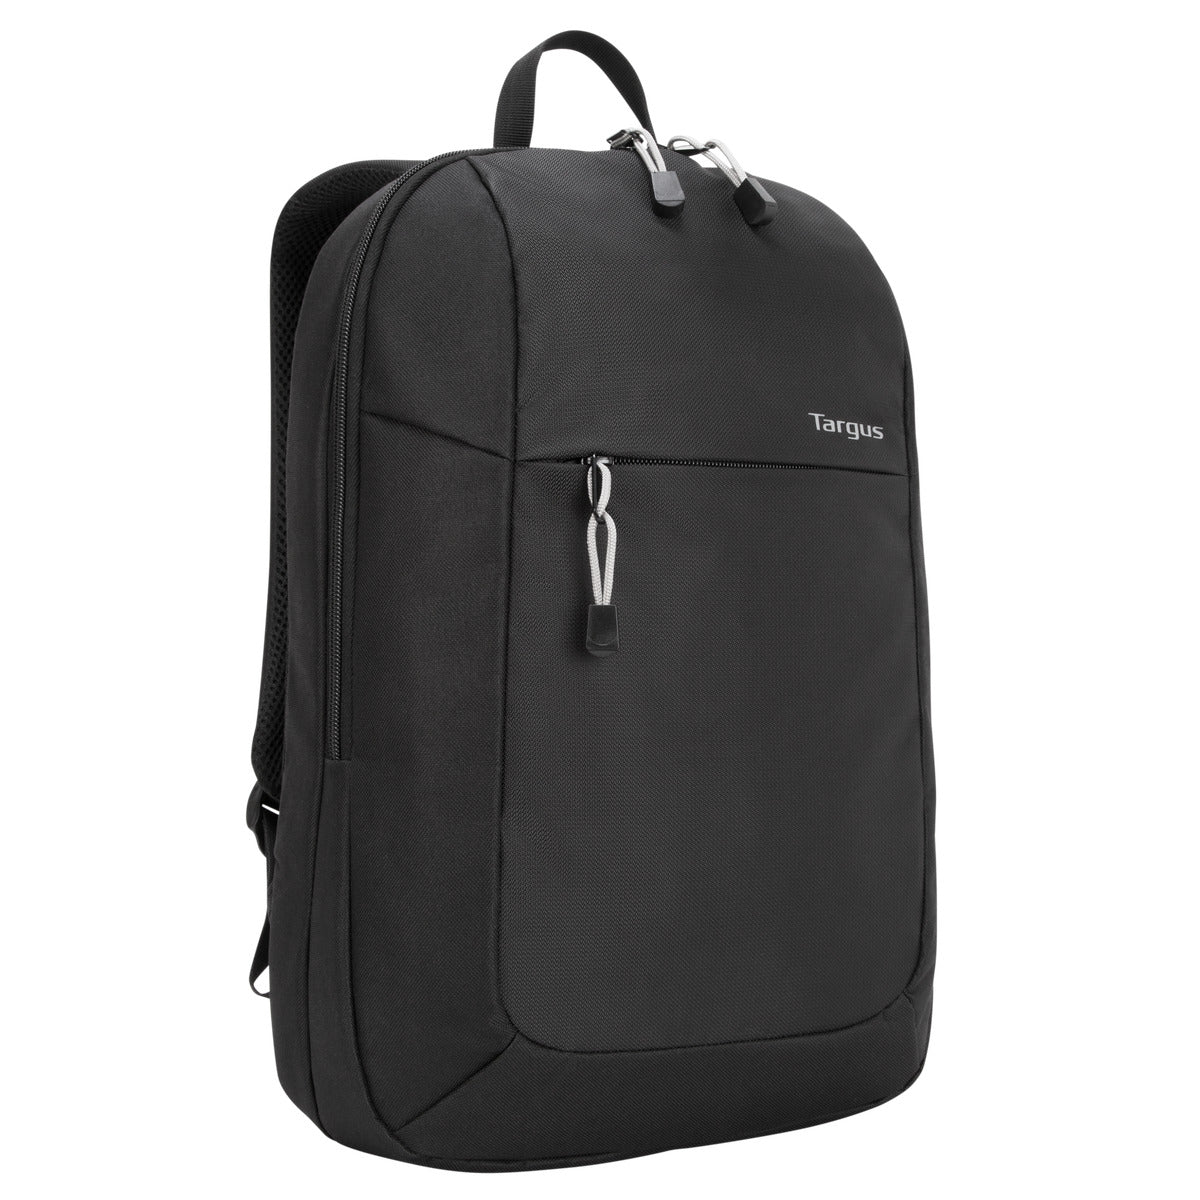 Intellect Advanced 15.6-inch Laptop (Black) Backpack | Targus